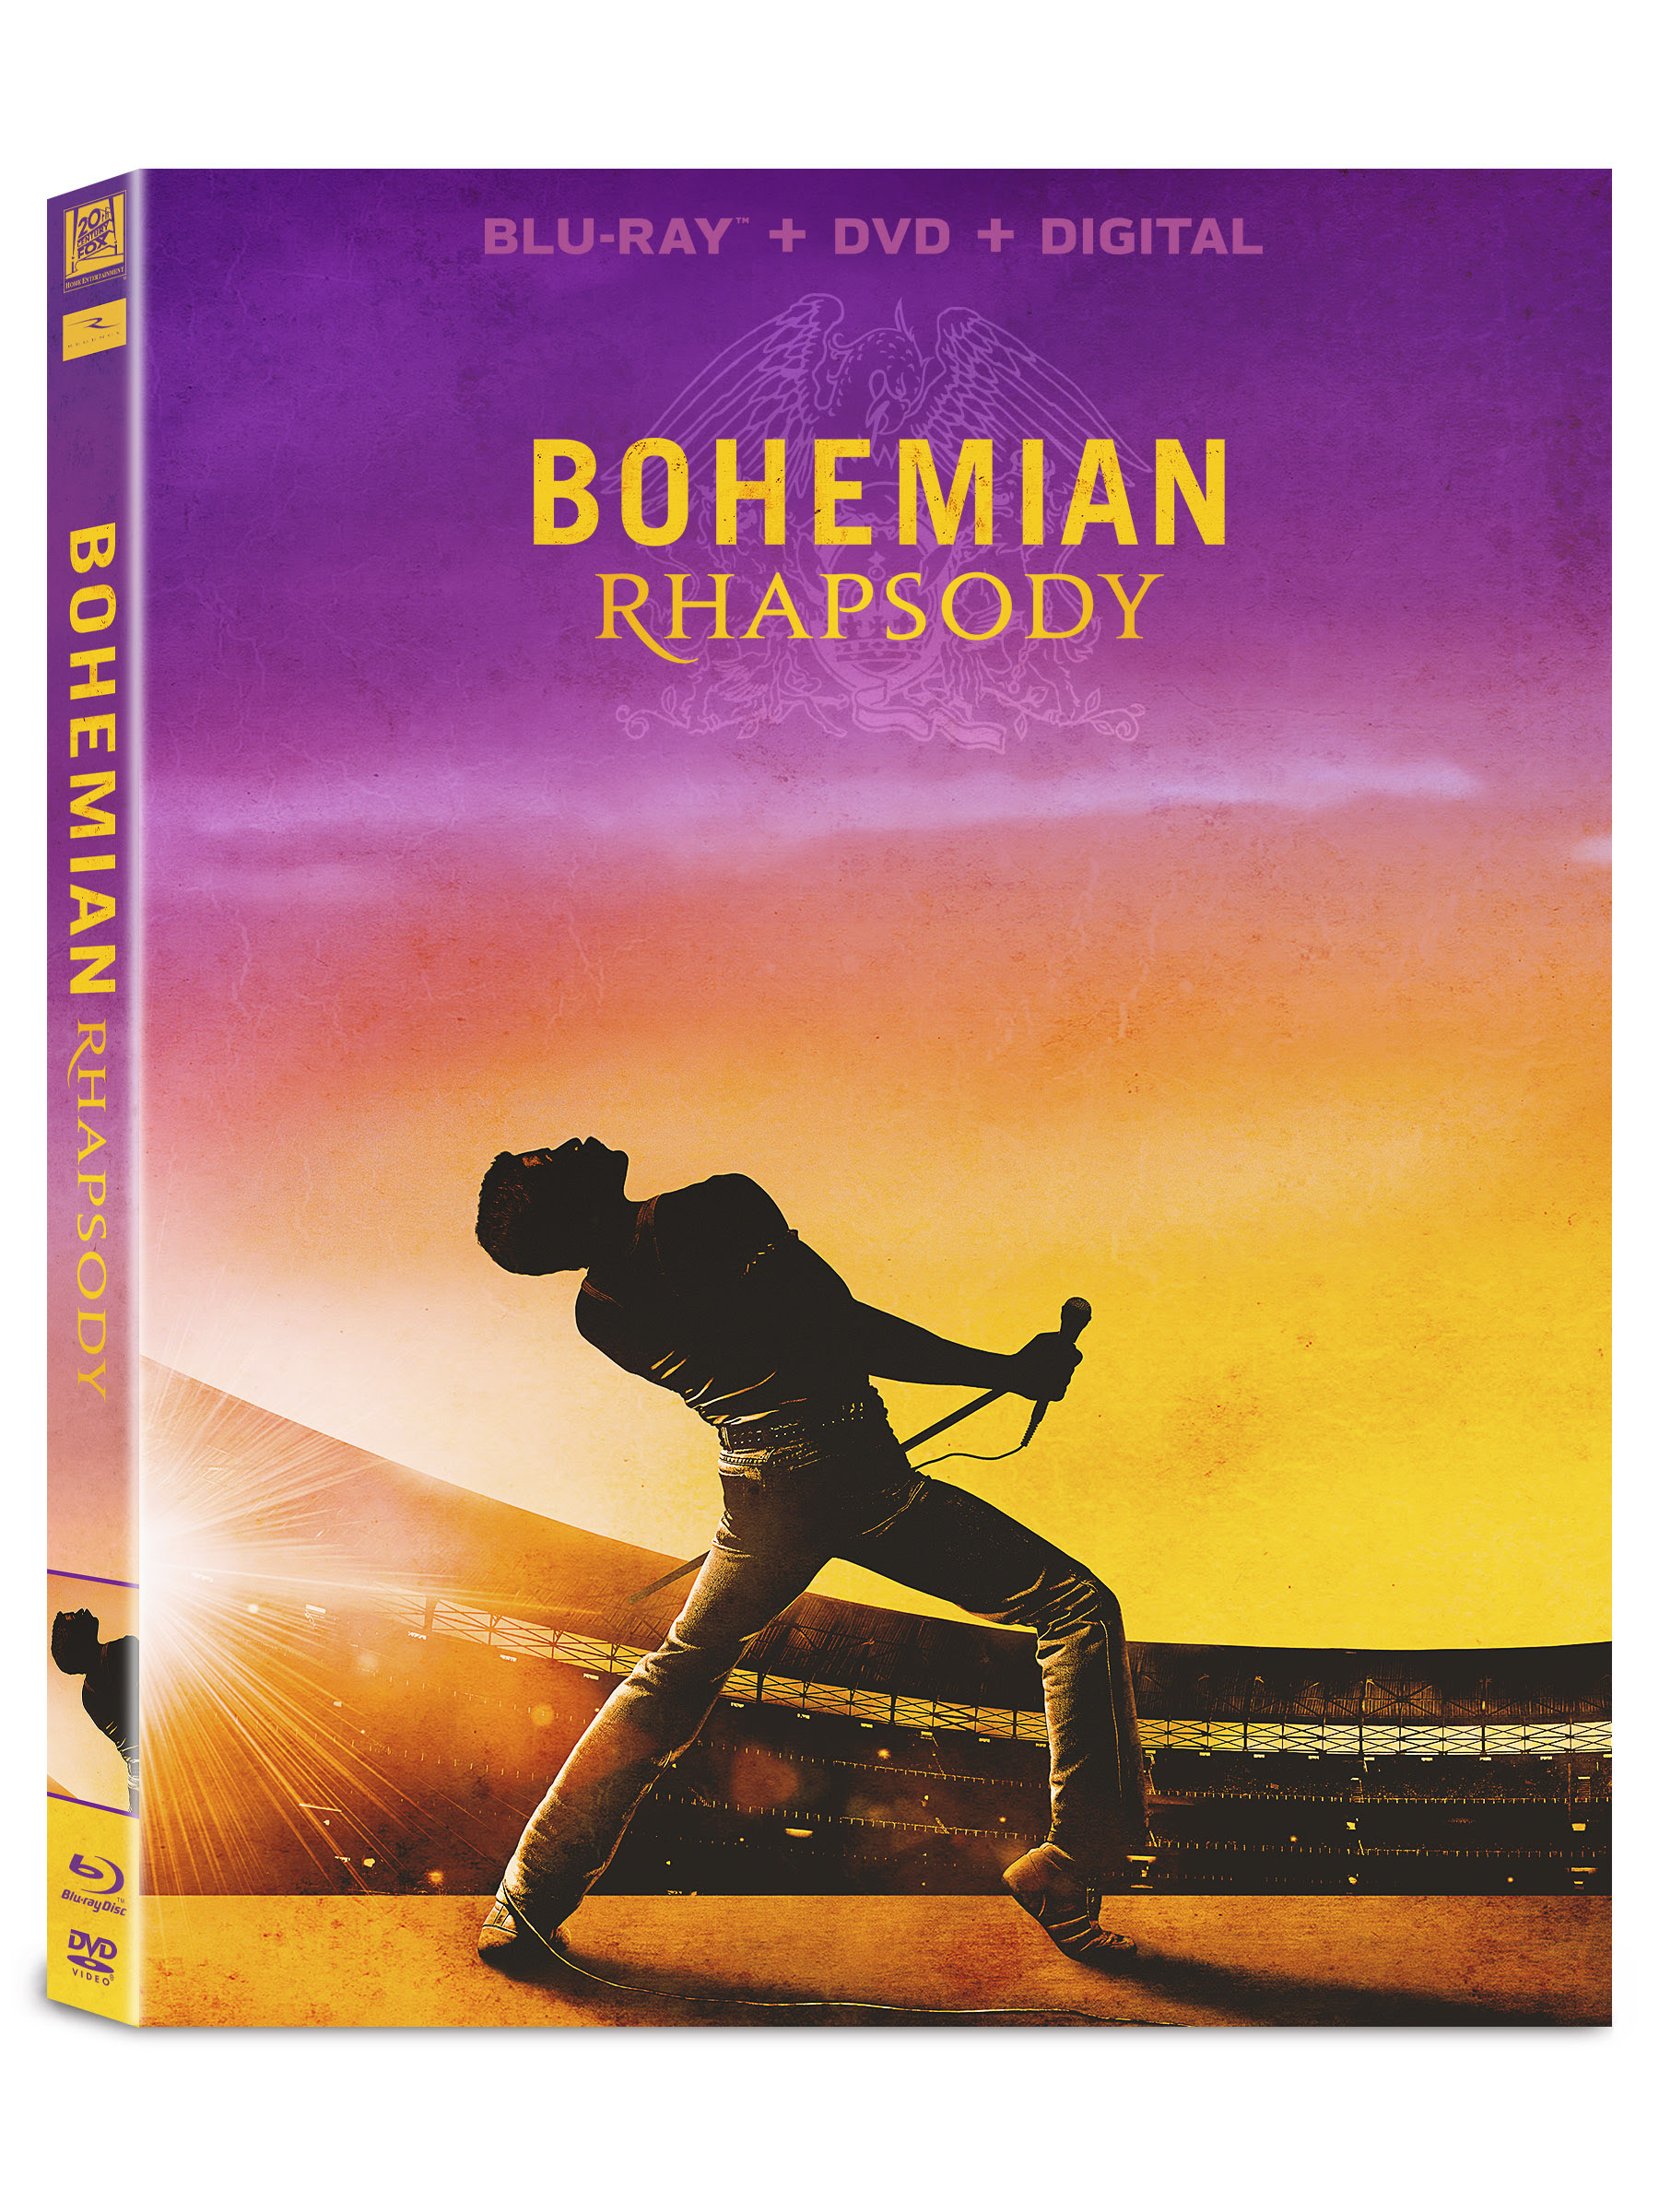 Bohemian Rhapsody Blu-ray Takes the Stage In February – /Film